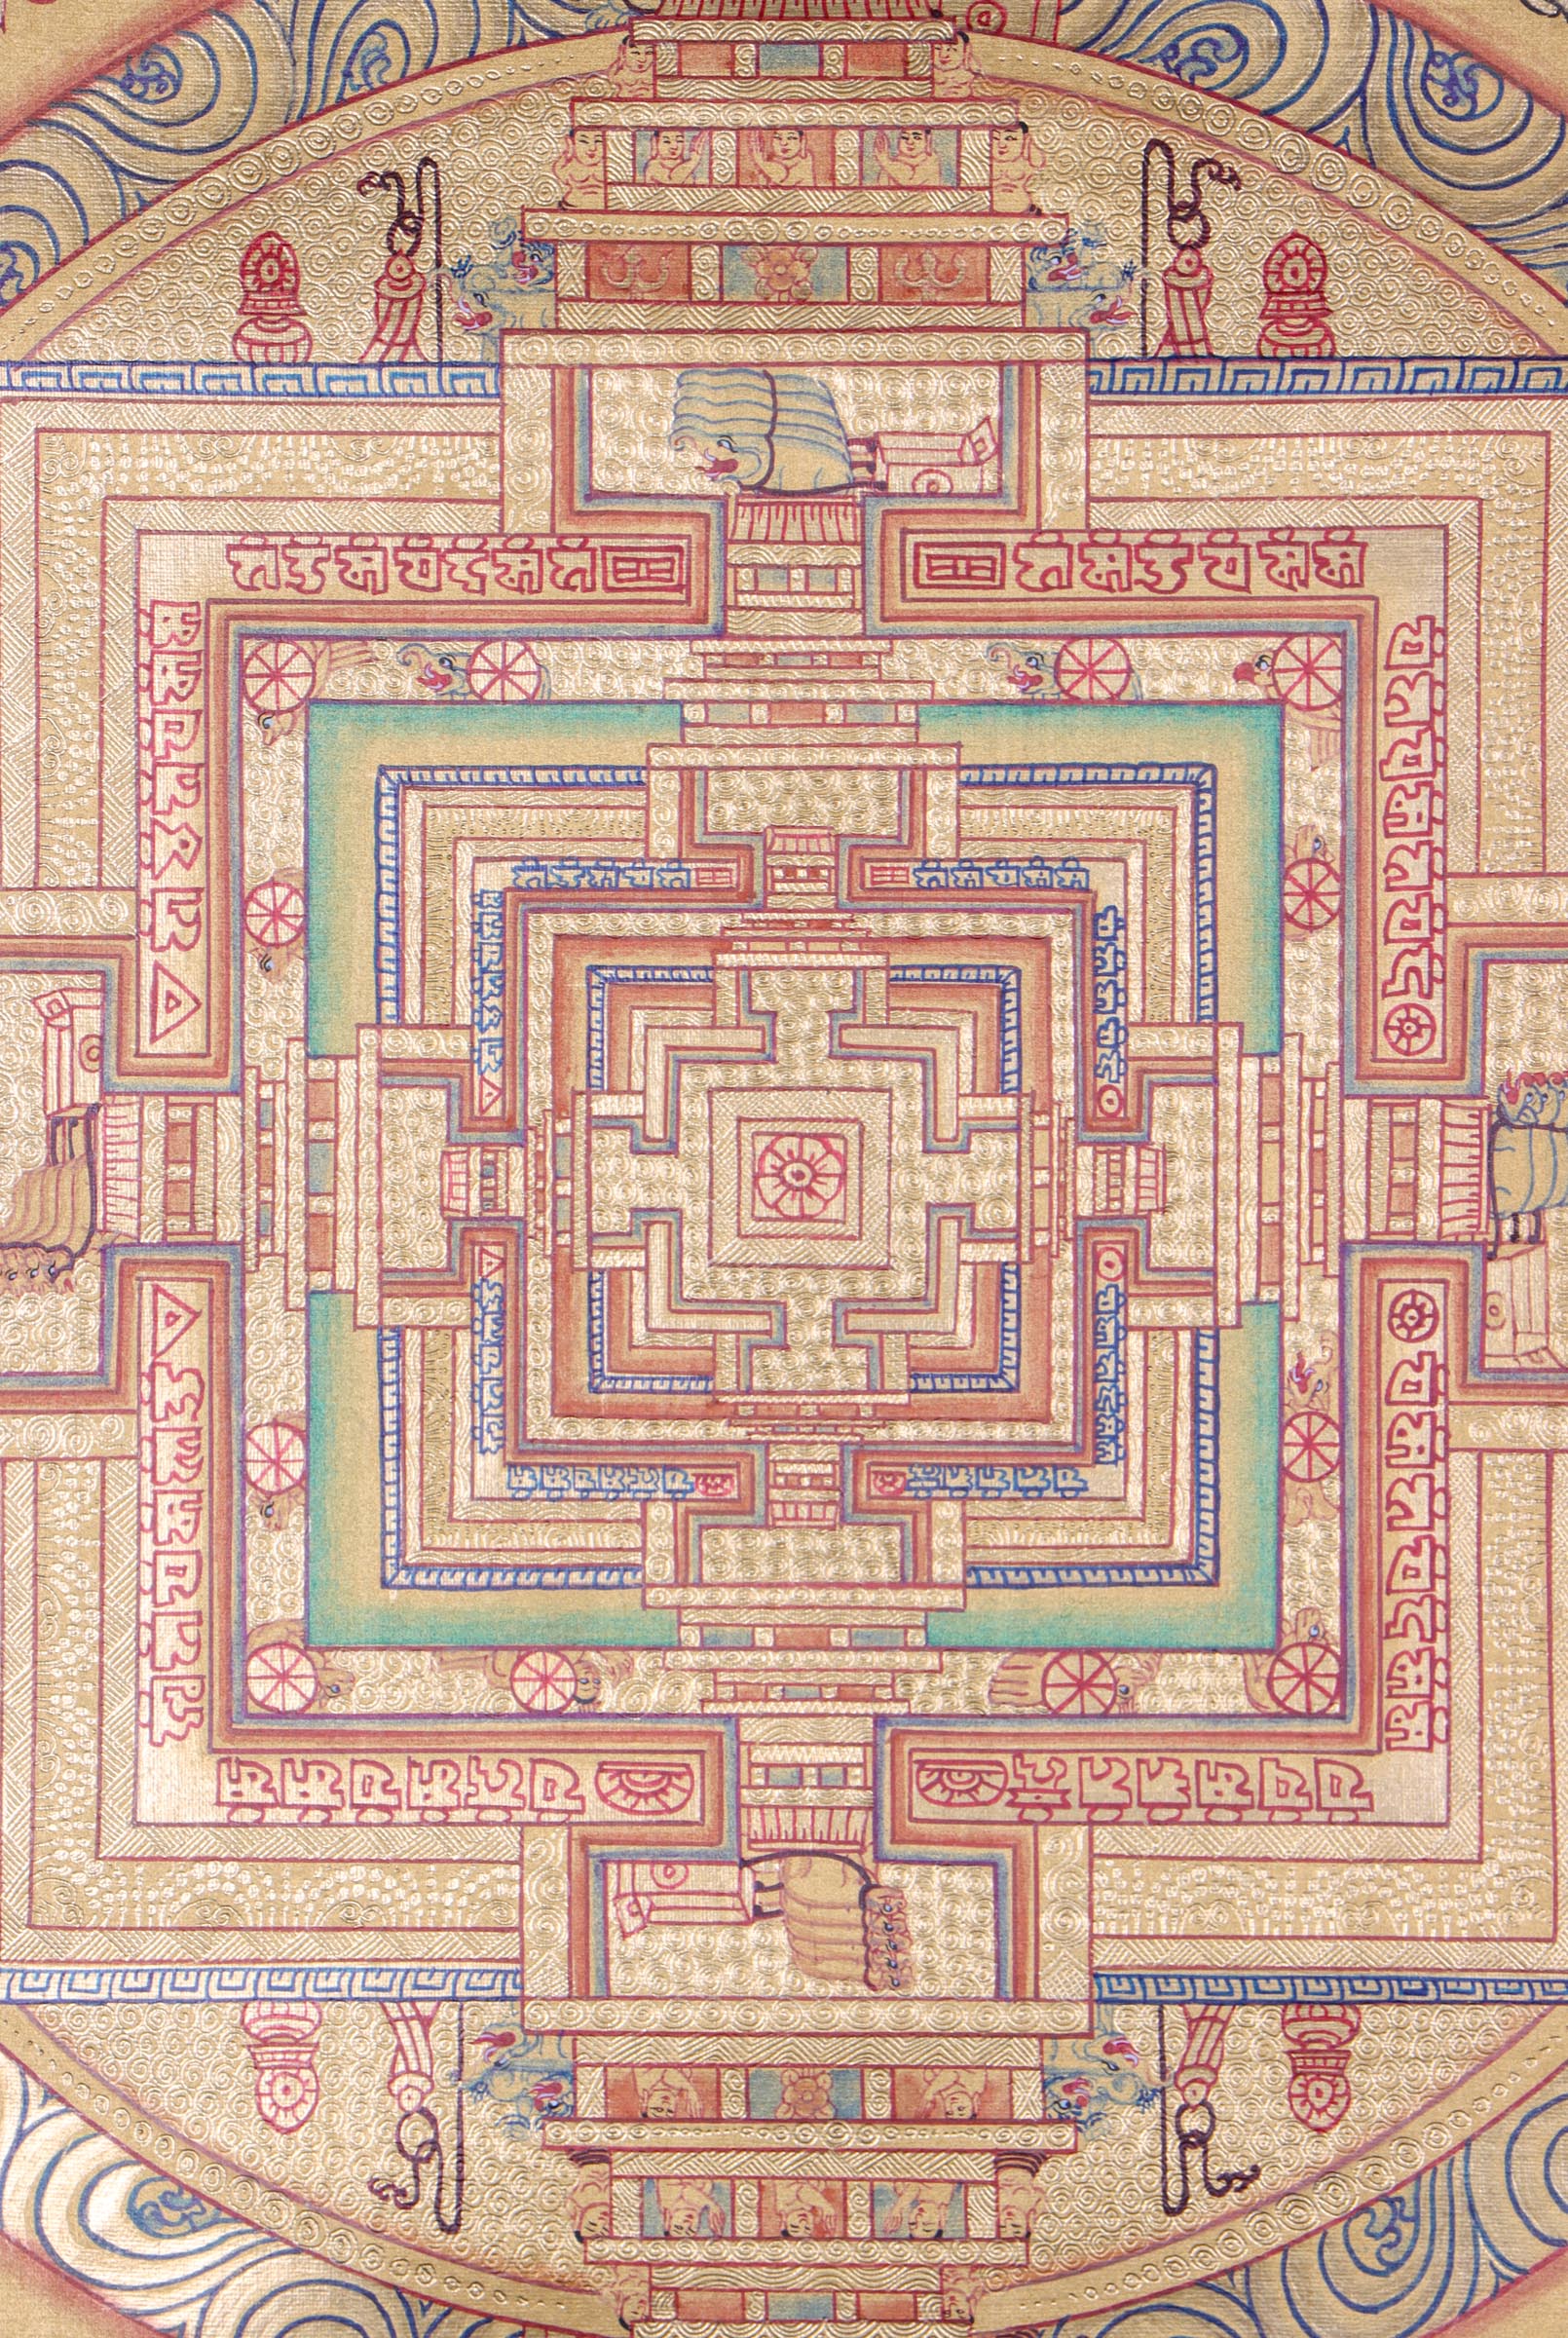 Kalachakra Mantra Mandala Thangka for meditation alter.